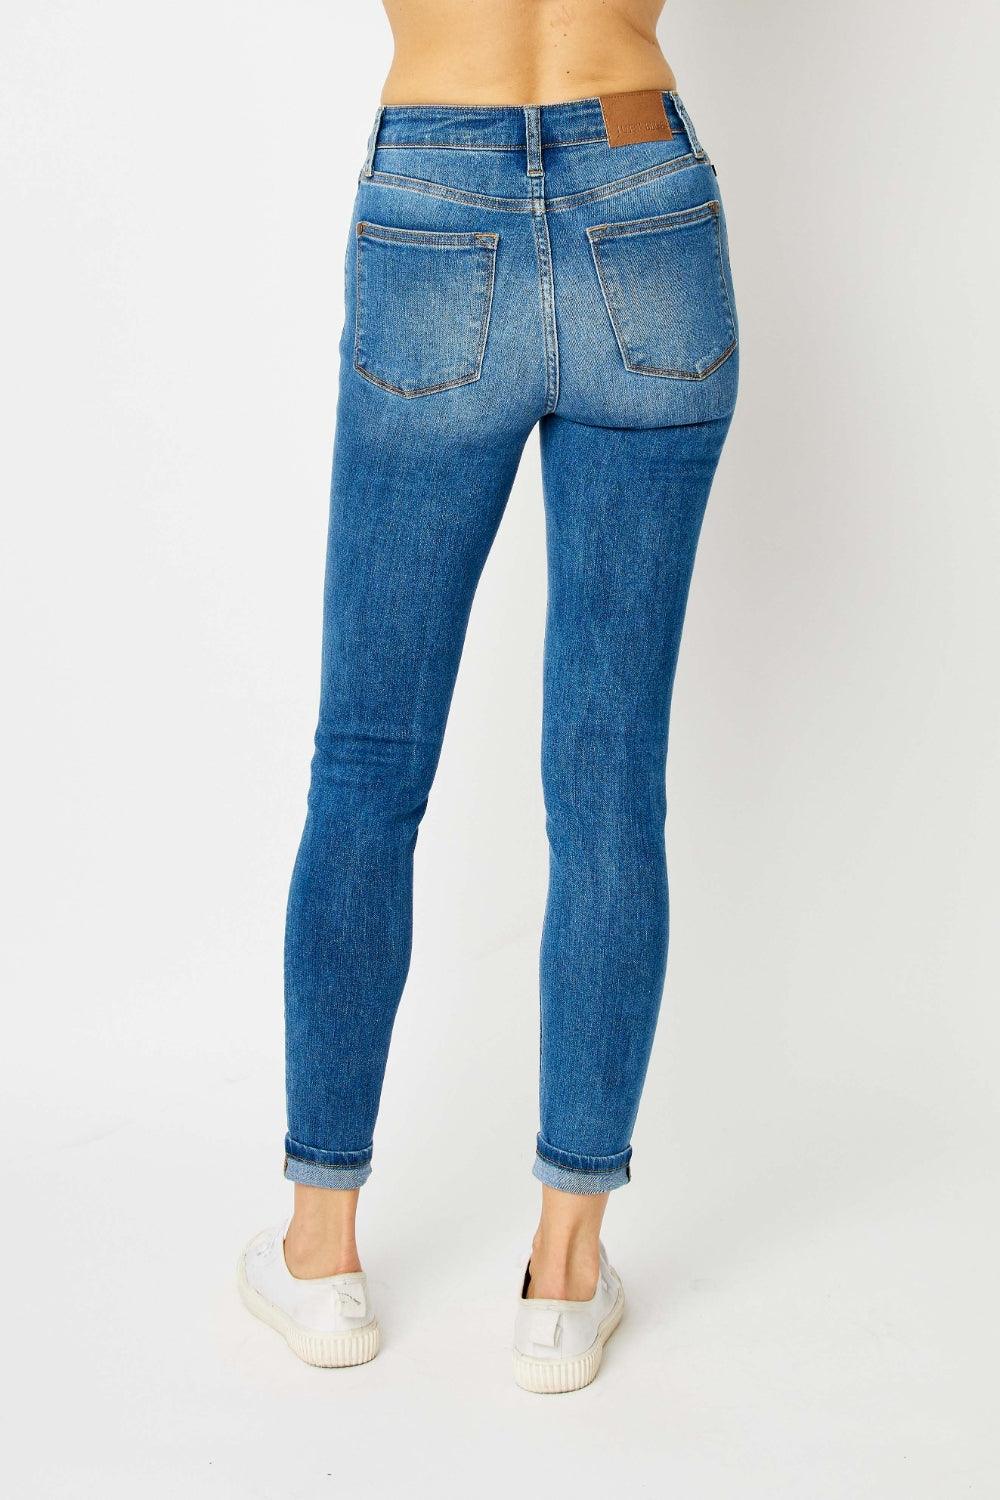 Judy Blue Cuffed Hem Skinny Jeans - Jessiz Boutique